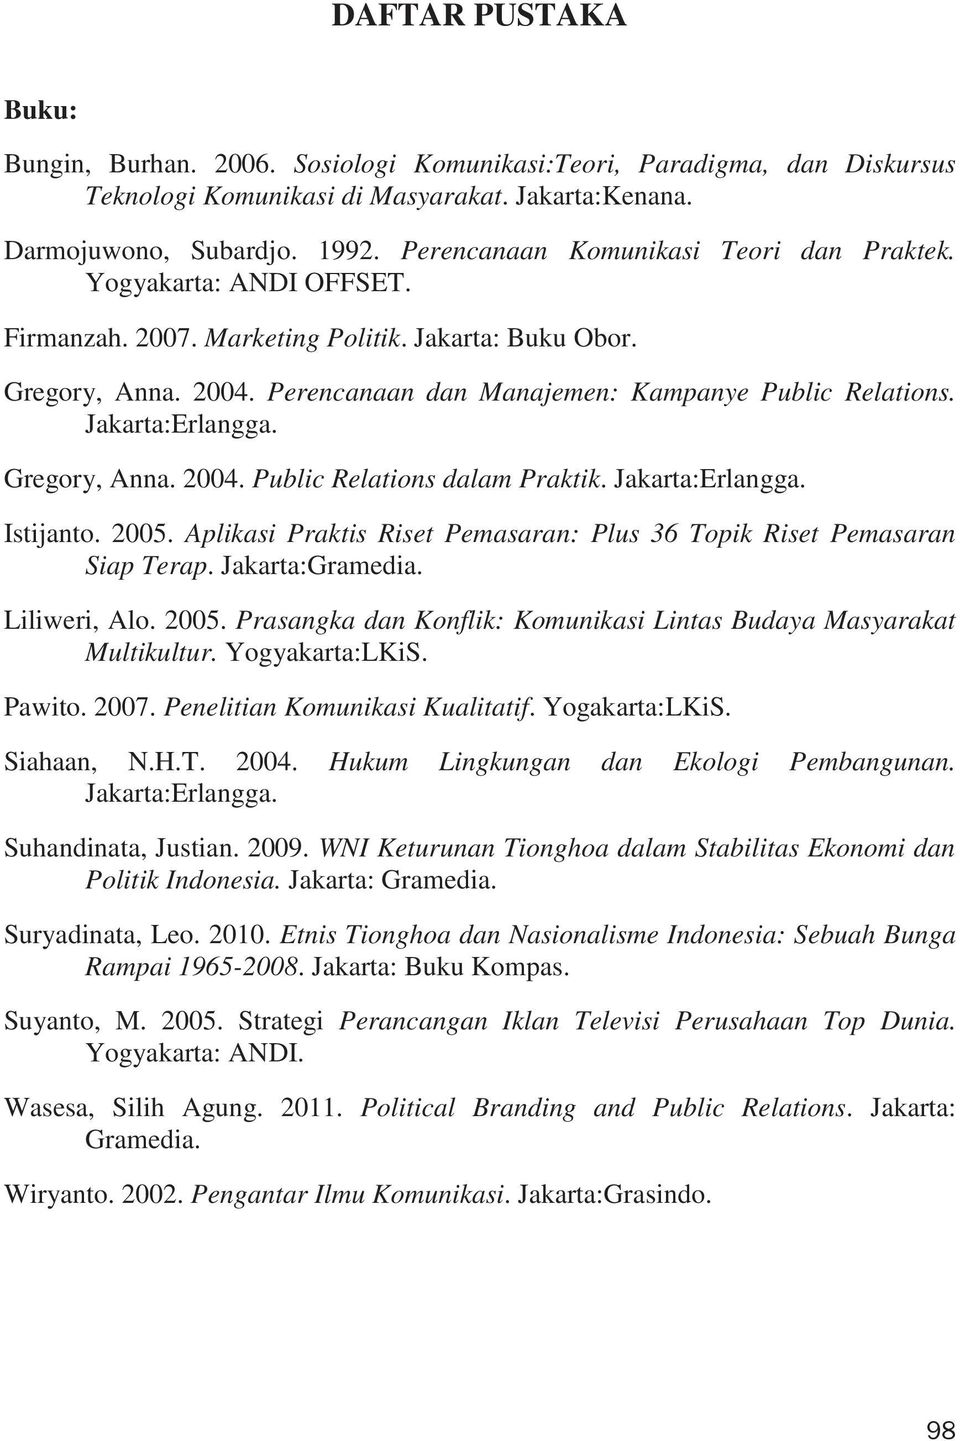 Jakarta:Erlangga. Gregory, Anna. 2004. Public Relations dalam Praktik. Jakarta:Erlangga. Istijanto. 2005. Aplikasi Praktis Riset Pemasaran: Plus 36 Topik Riset Pemasaran Siap Terap. Jakarta:Gramedia.